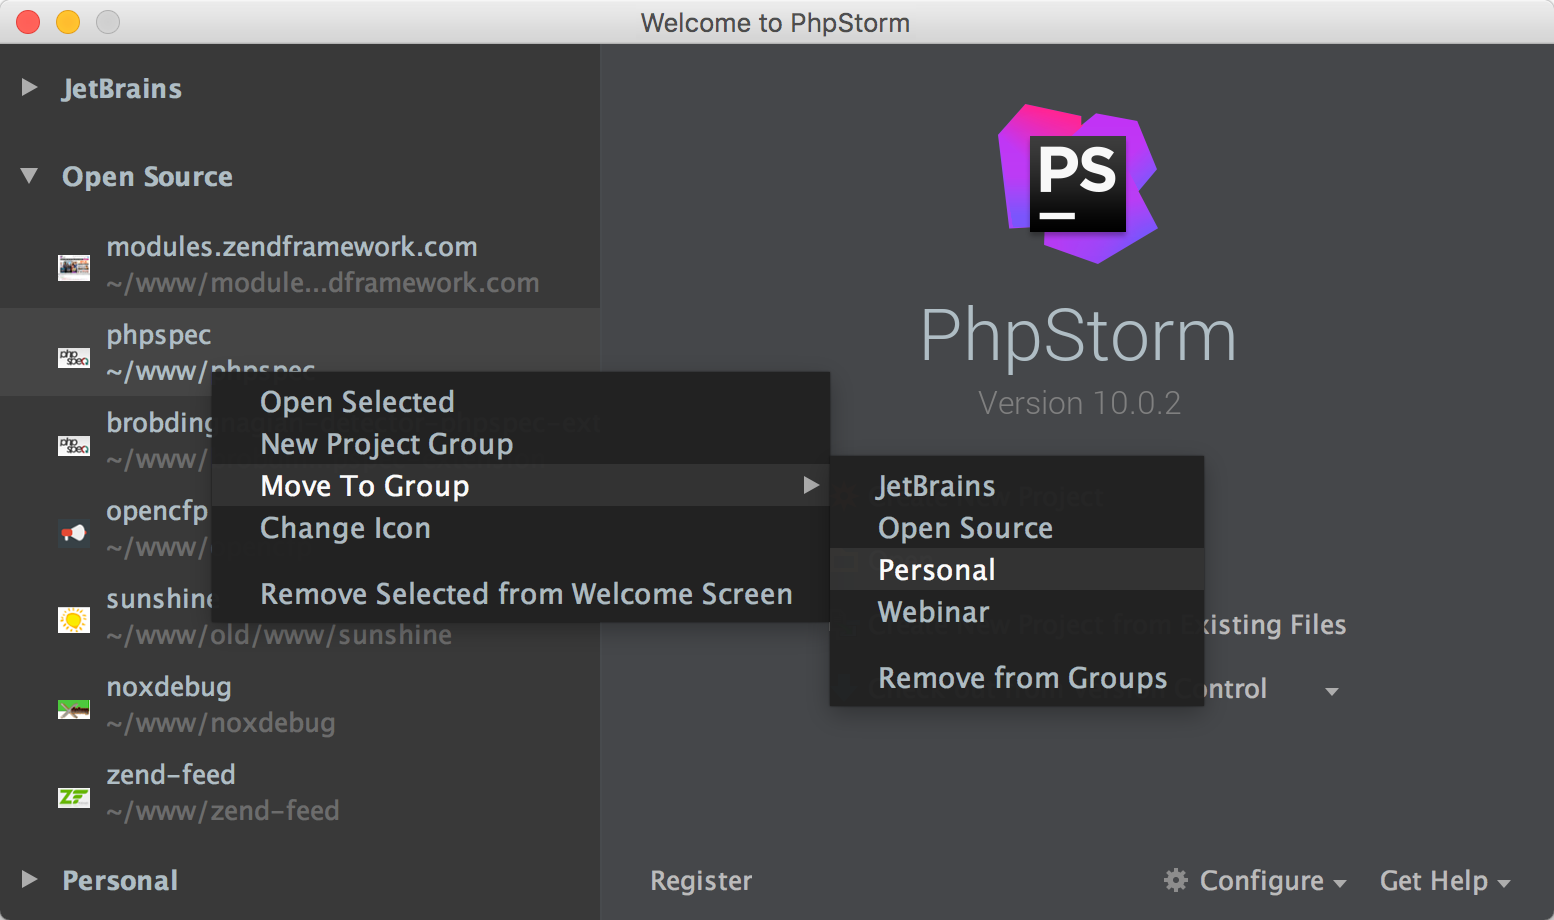 New Project Management Window in PhpStorm 10.